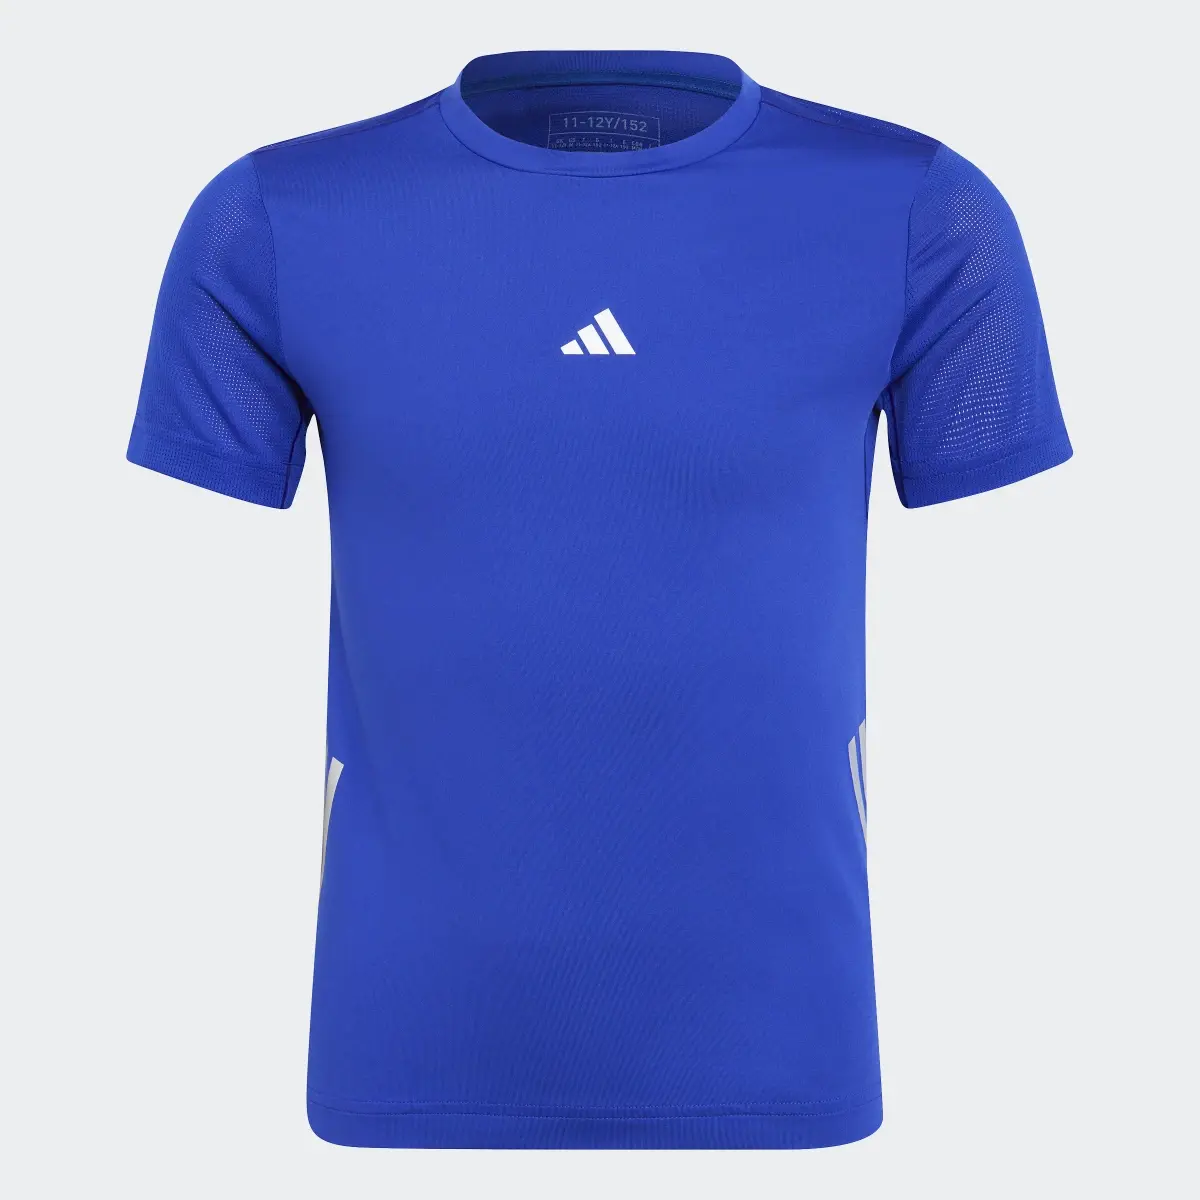 Adidas T-shirt AEROREADY 3-Stripes. 3